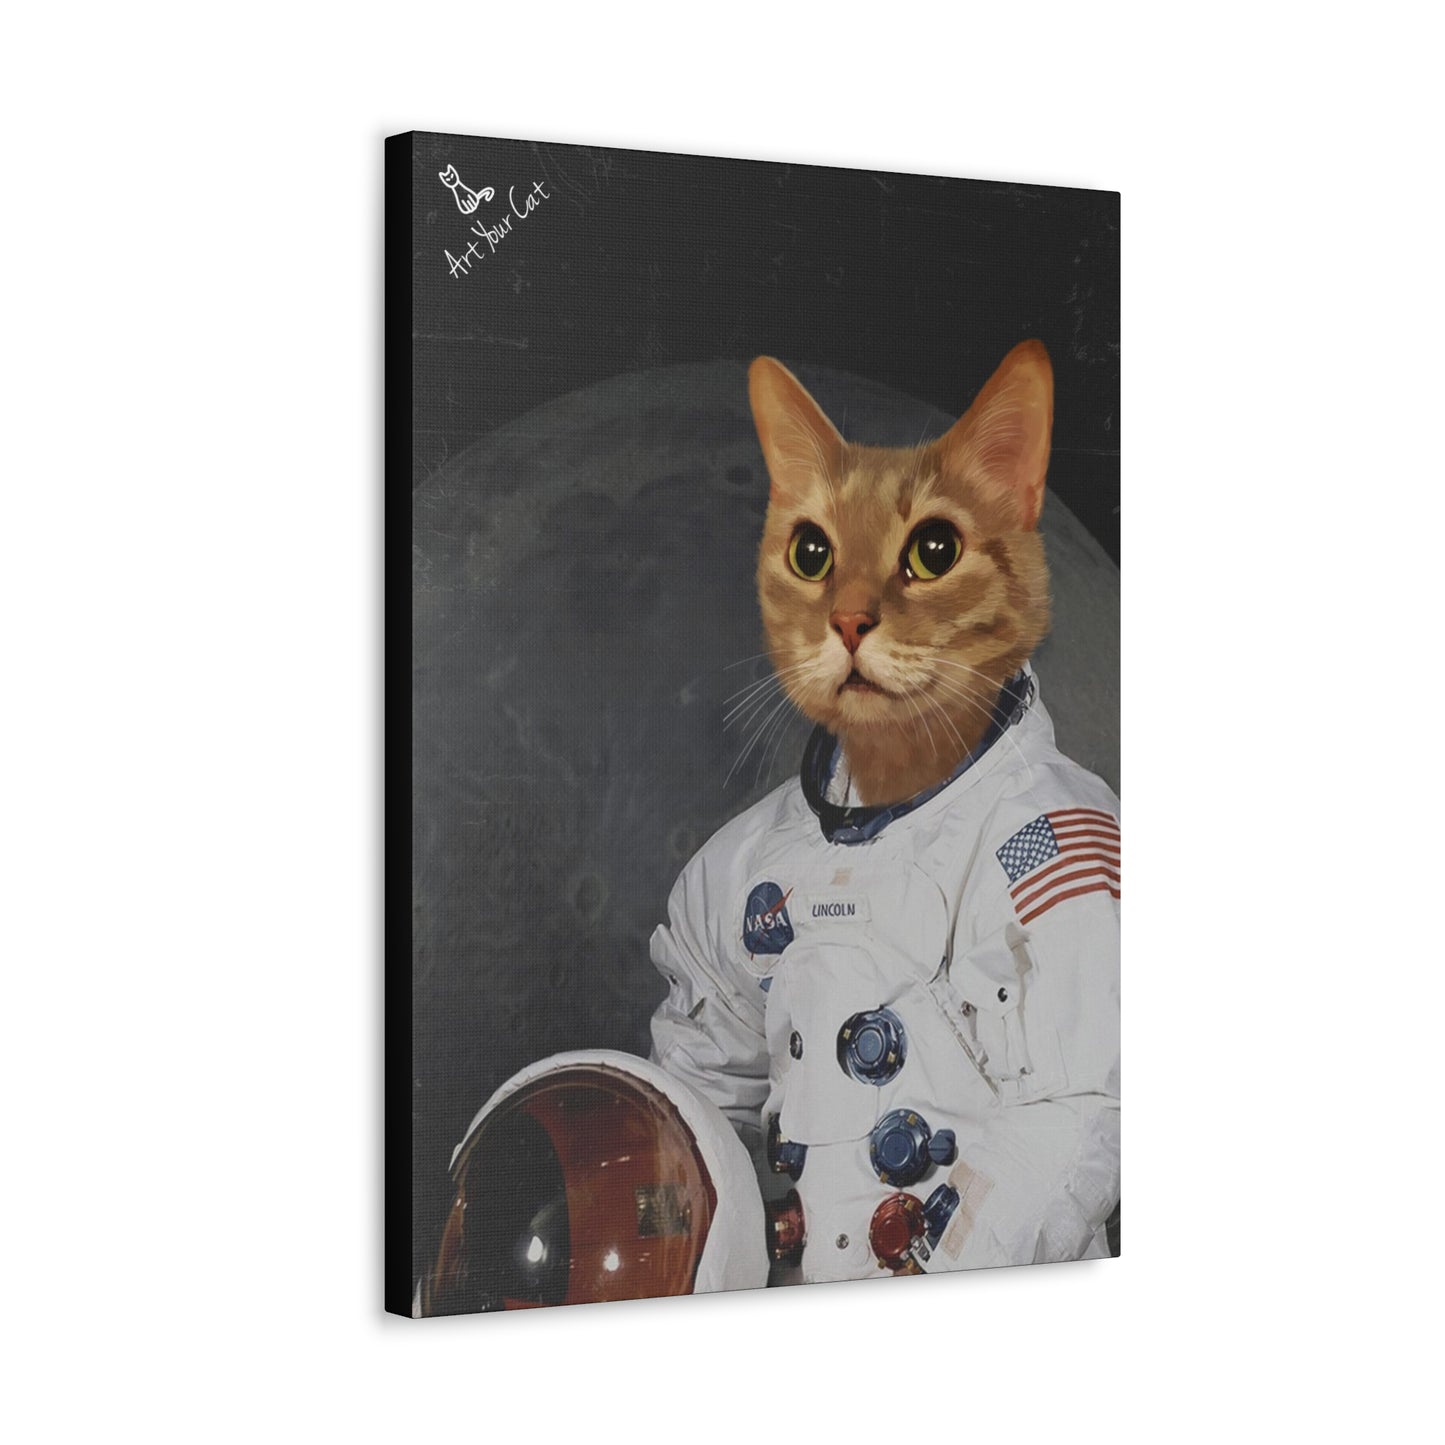 The Astronaut - Custom Cat Portrait - Sideview